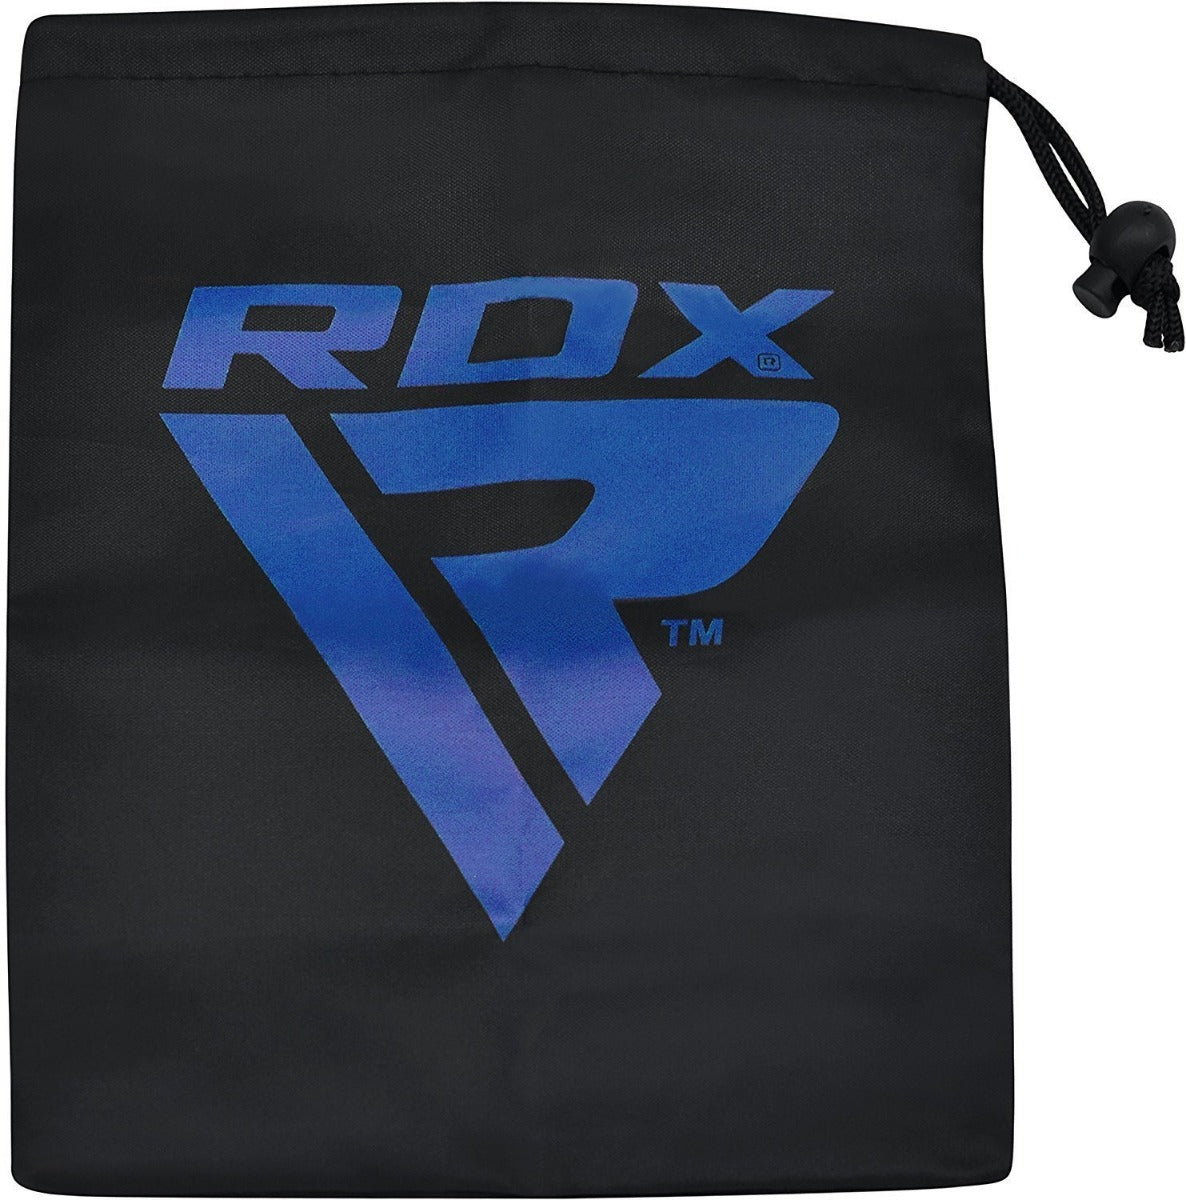 RDX C3 Aluminum Handle Adjustable Skipping Rope